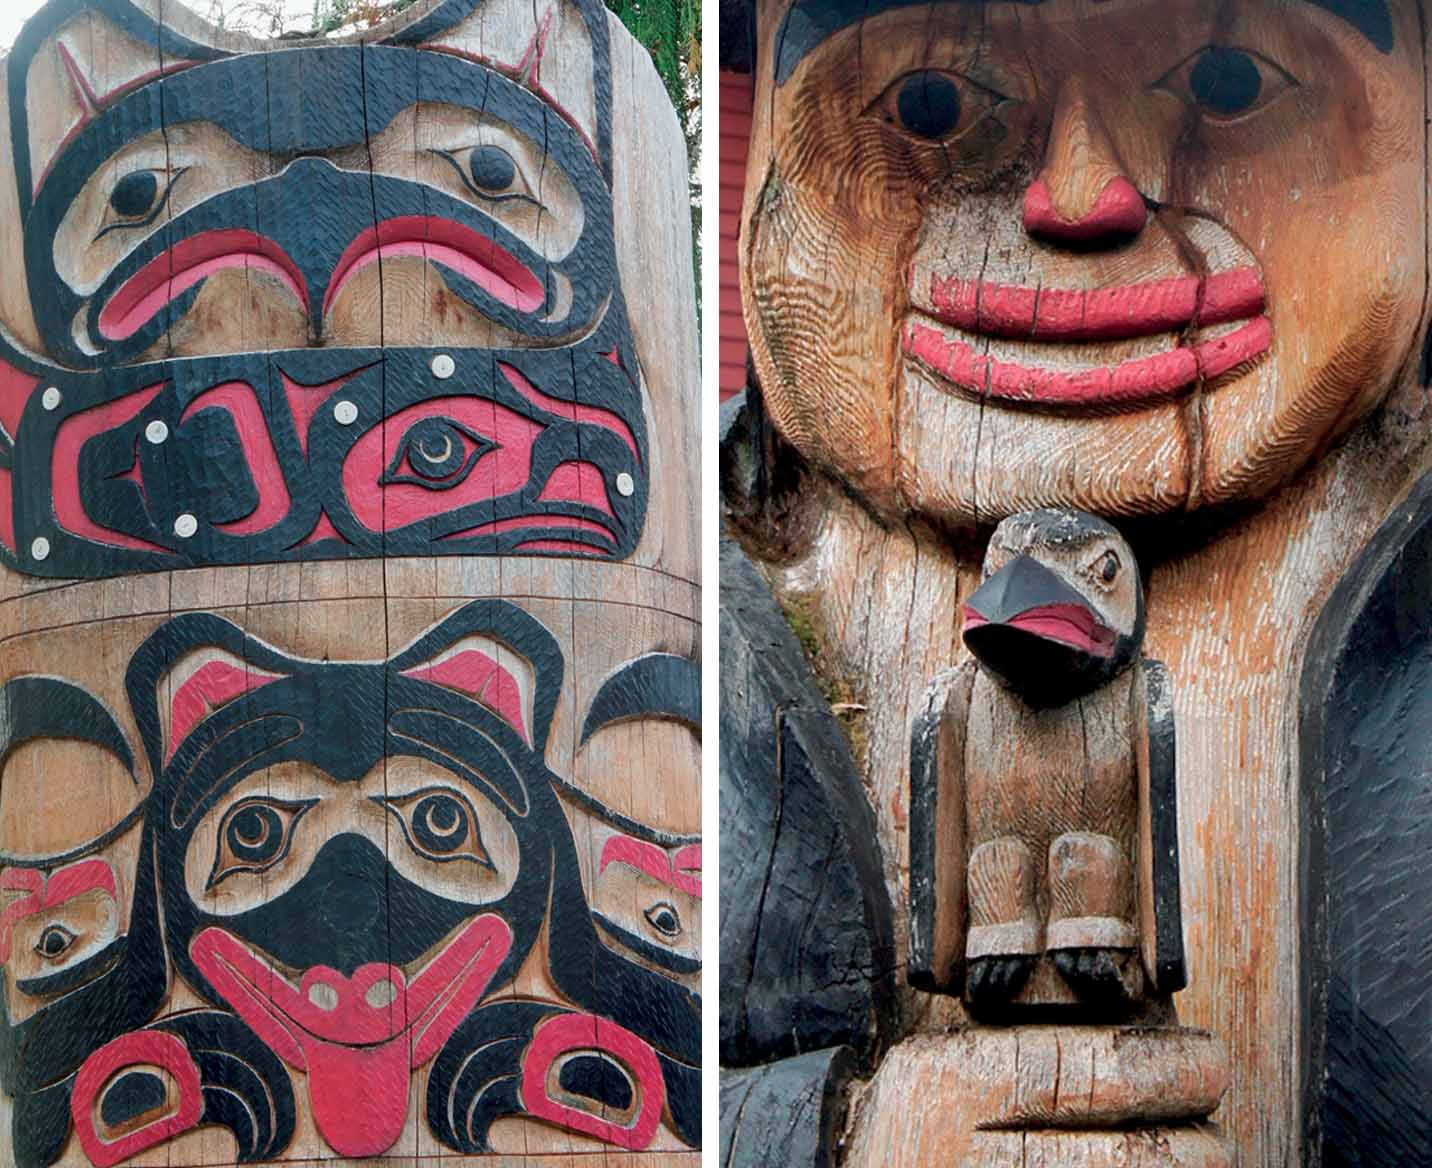 technology-indigenous-communities-totem-pole-images-from-yukon